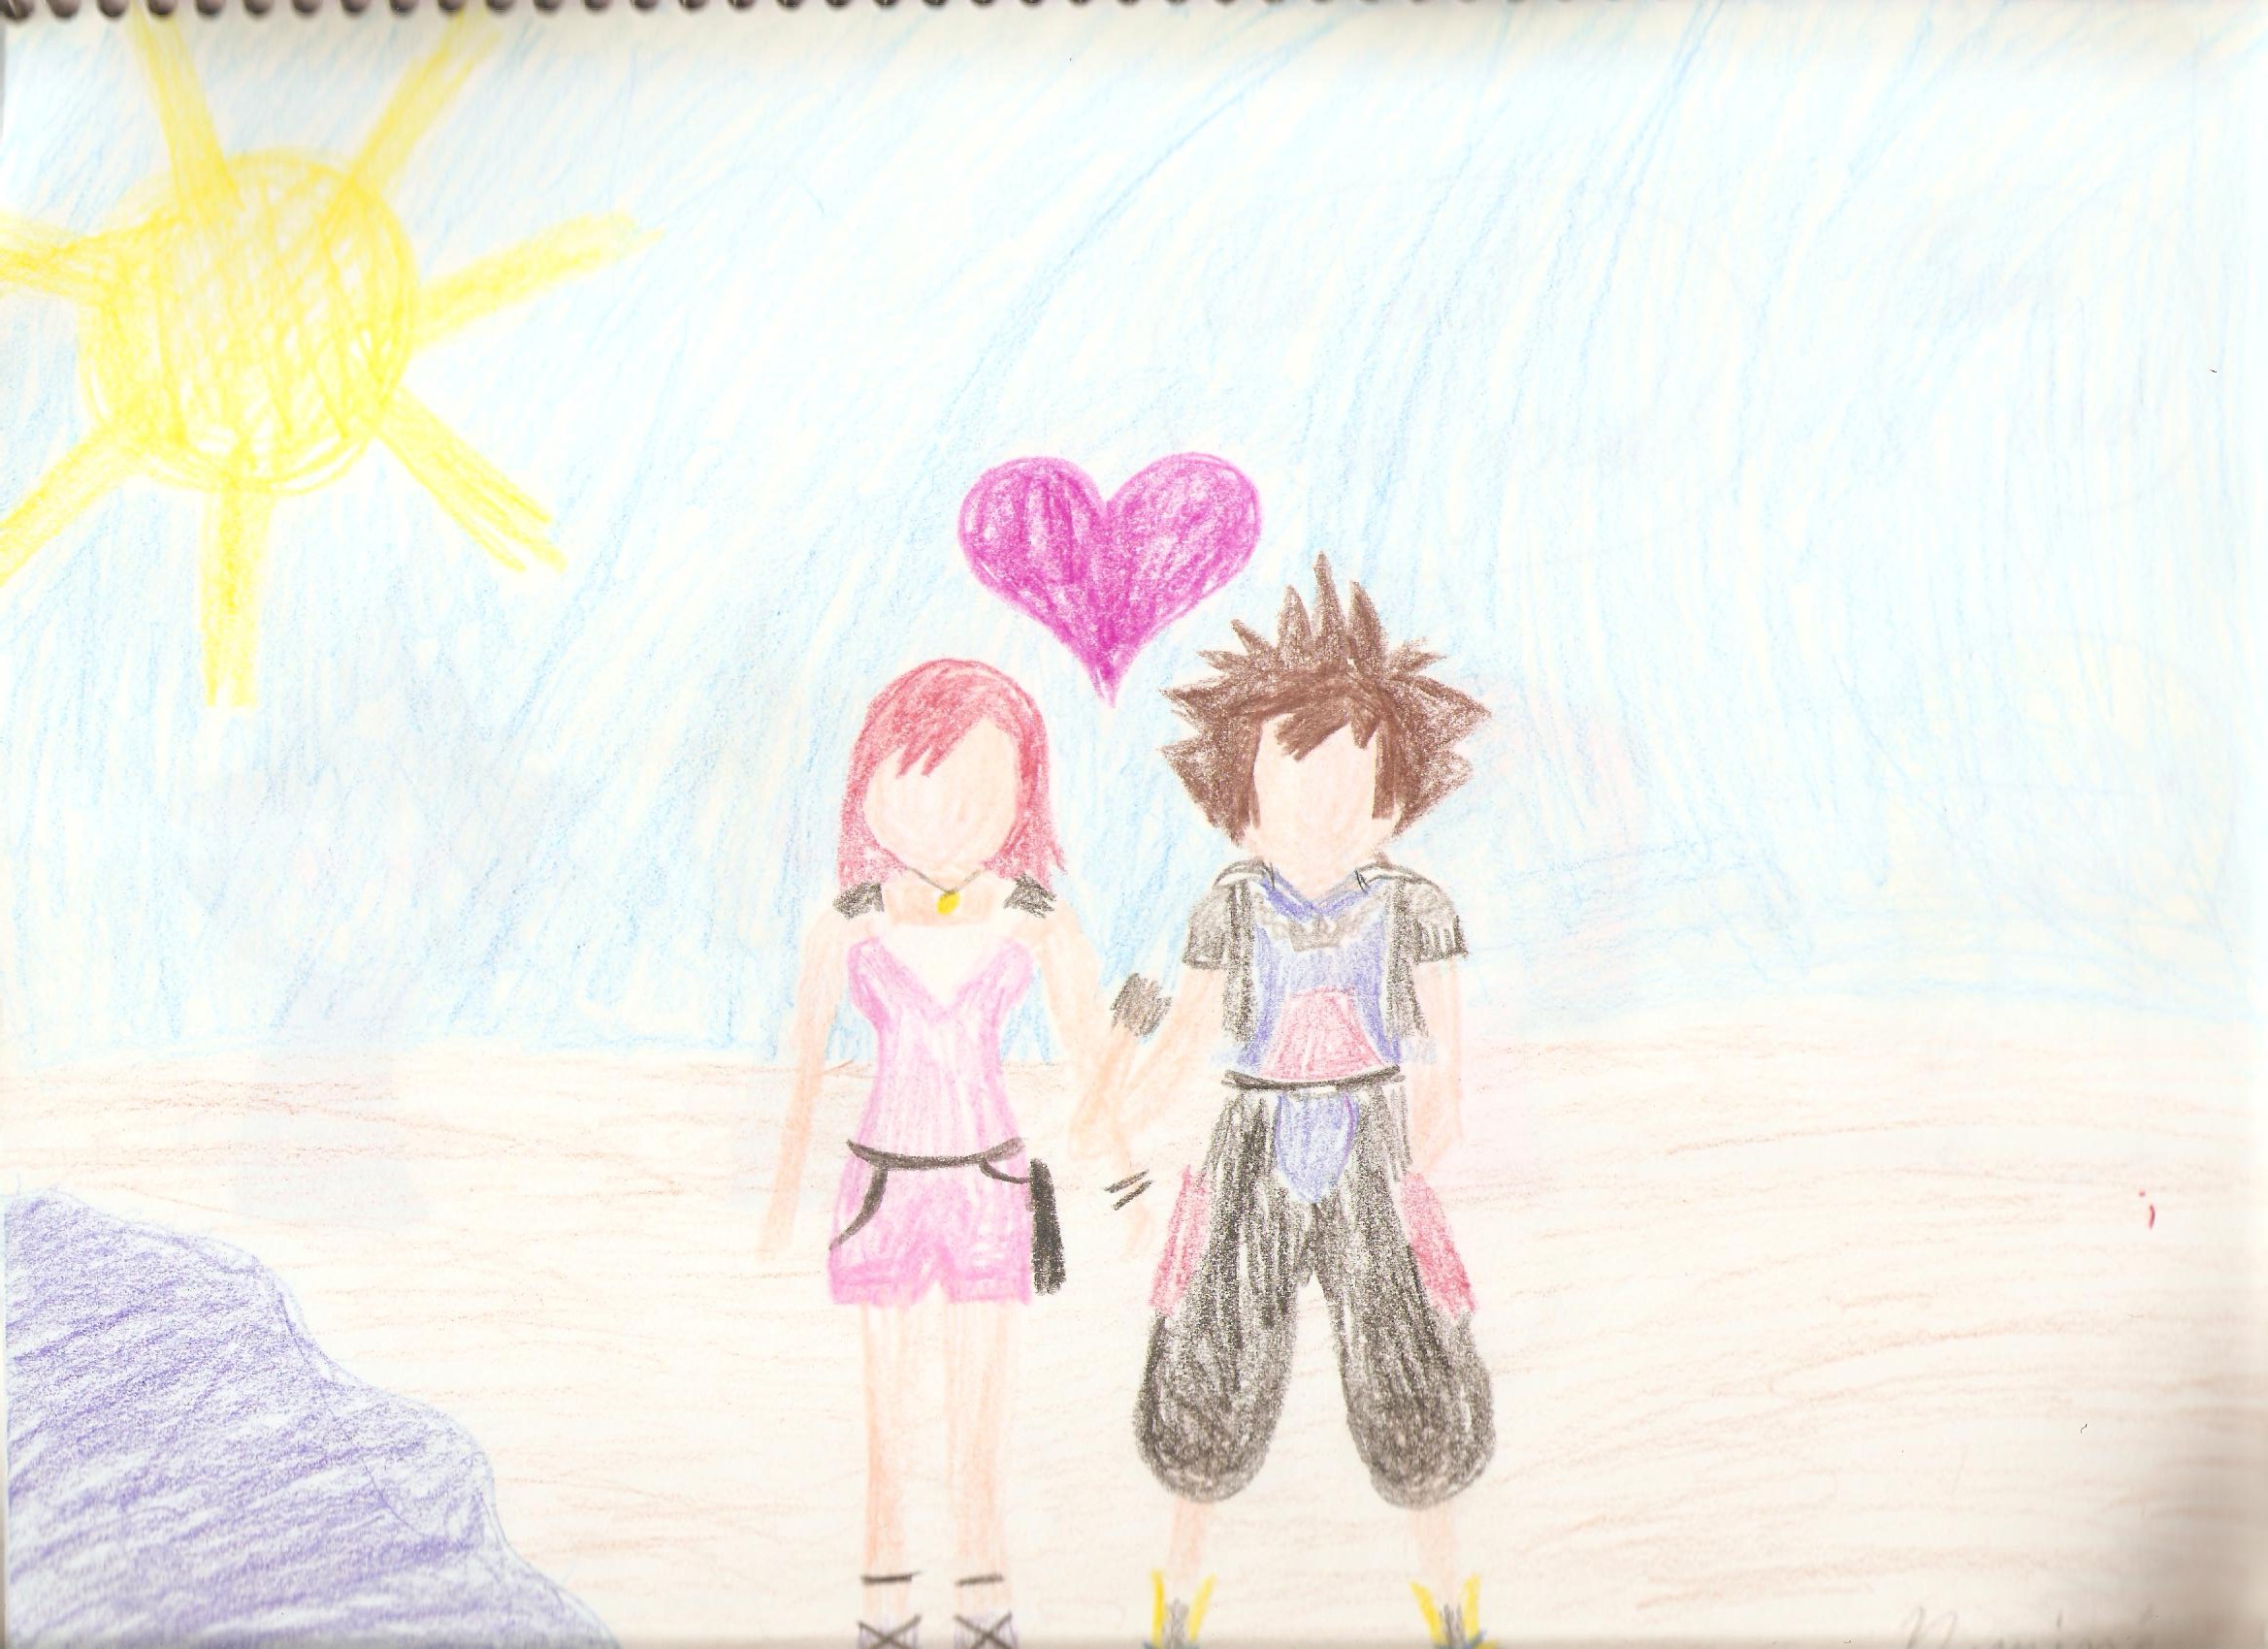 Sora and Kairi: By Namine by nupinoop296